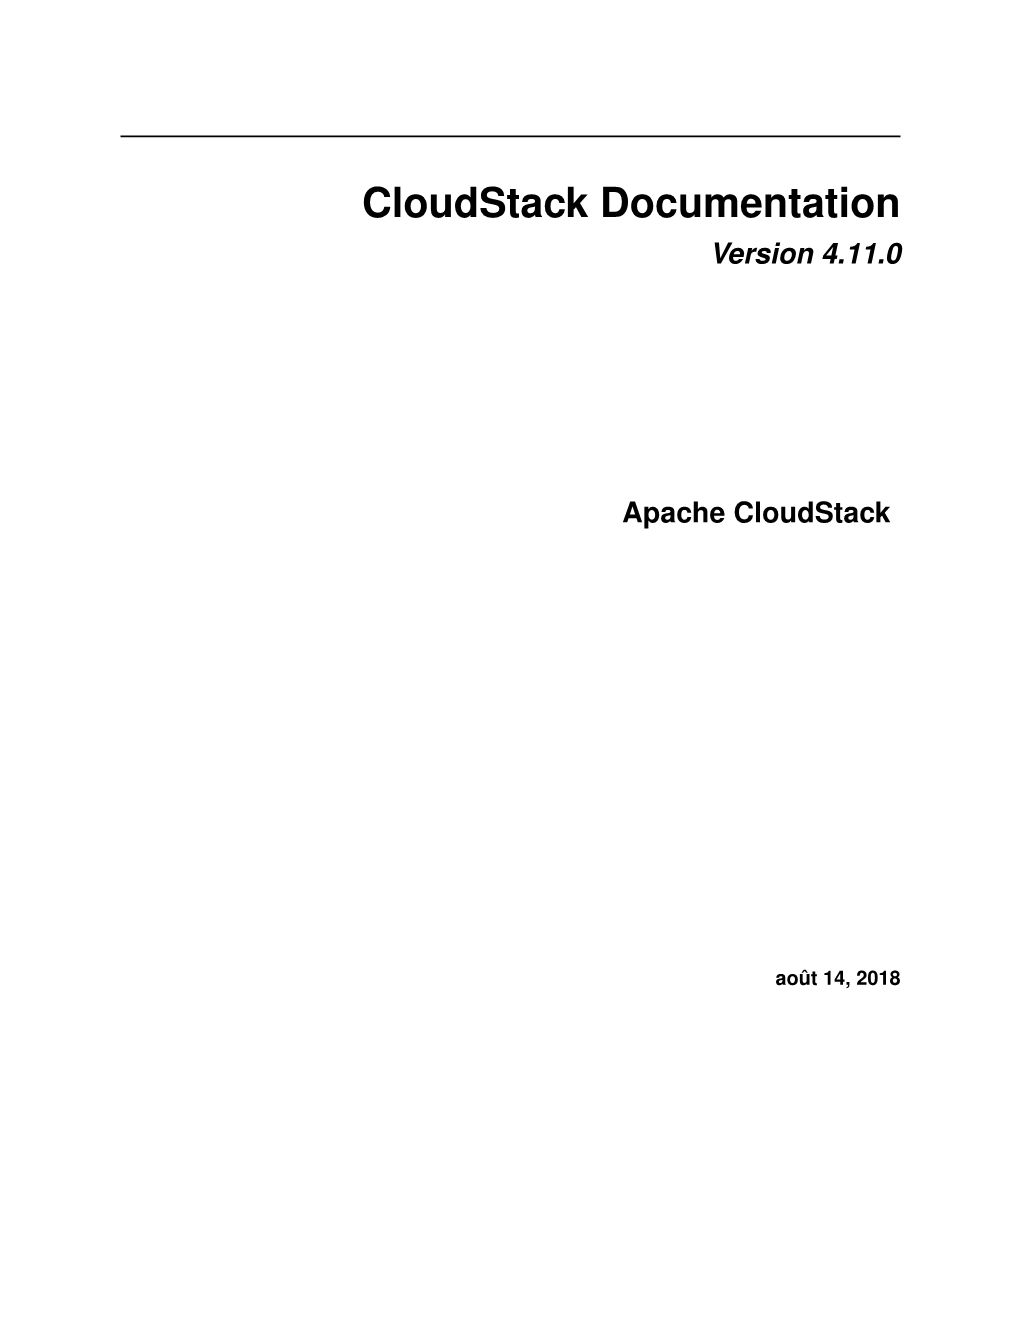 Cloudstack Documentation!